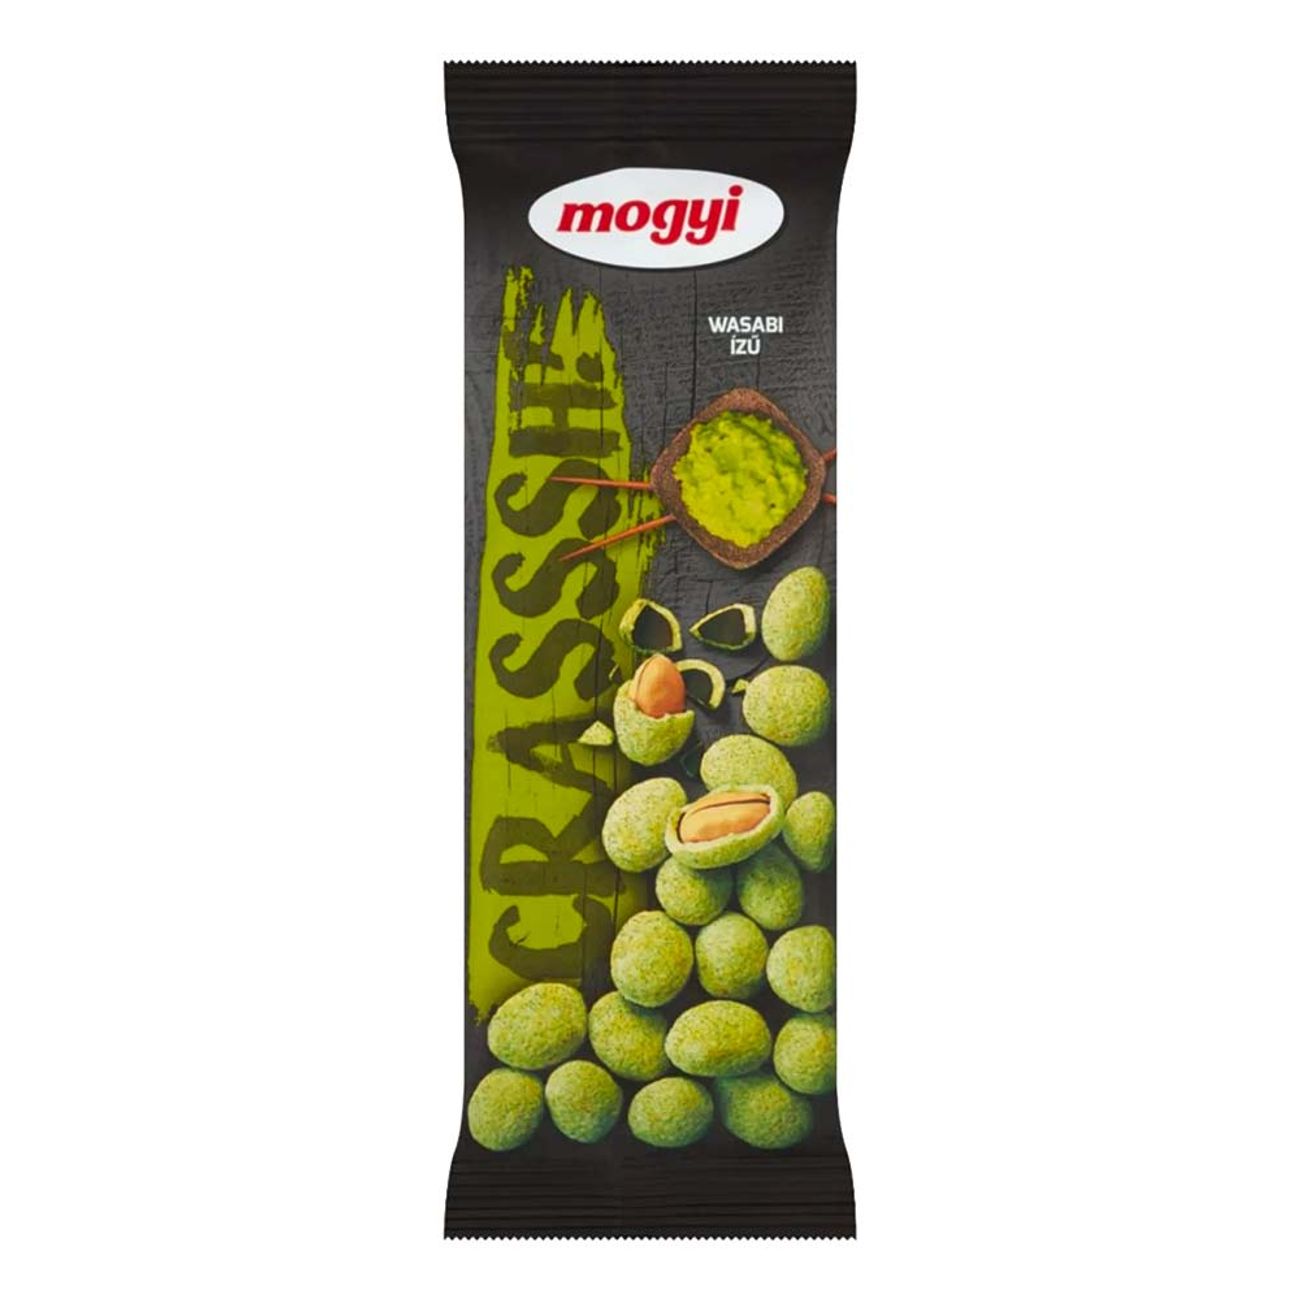 mogyi-crasssh-wasabi-jordnotter-95068-1